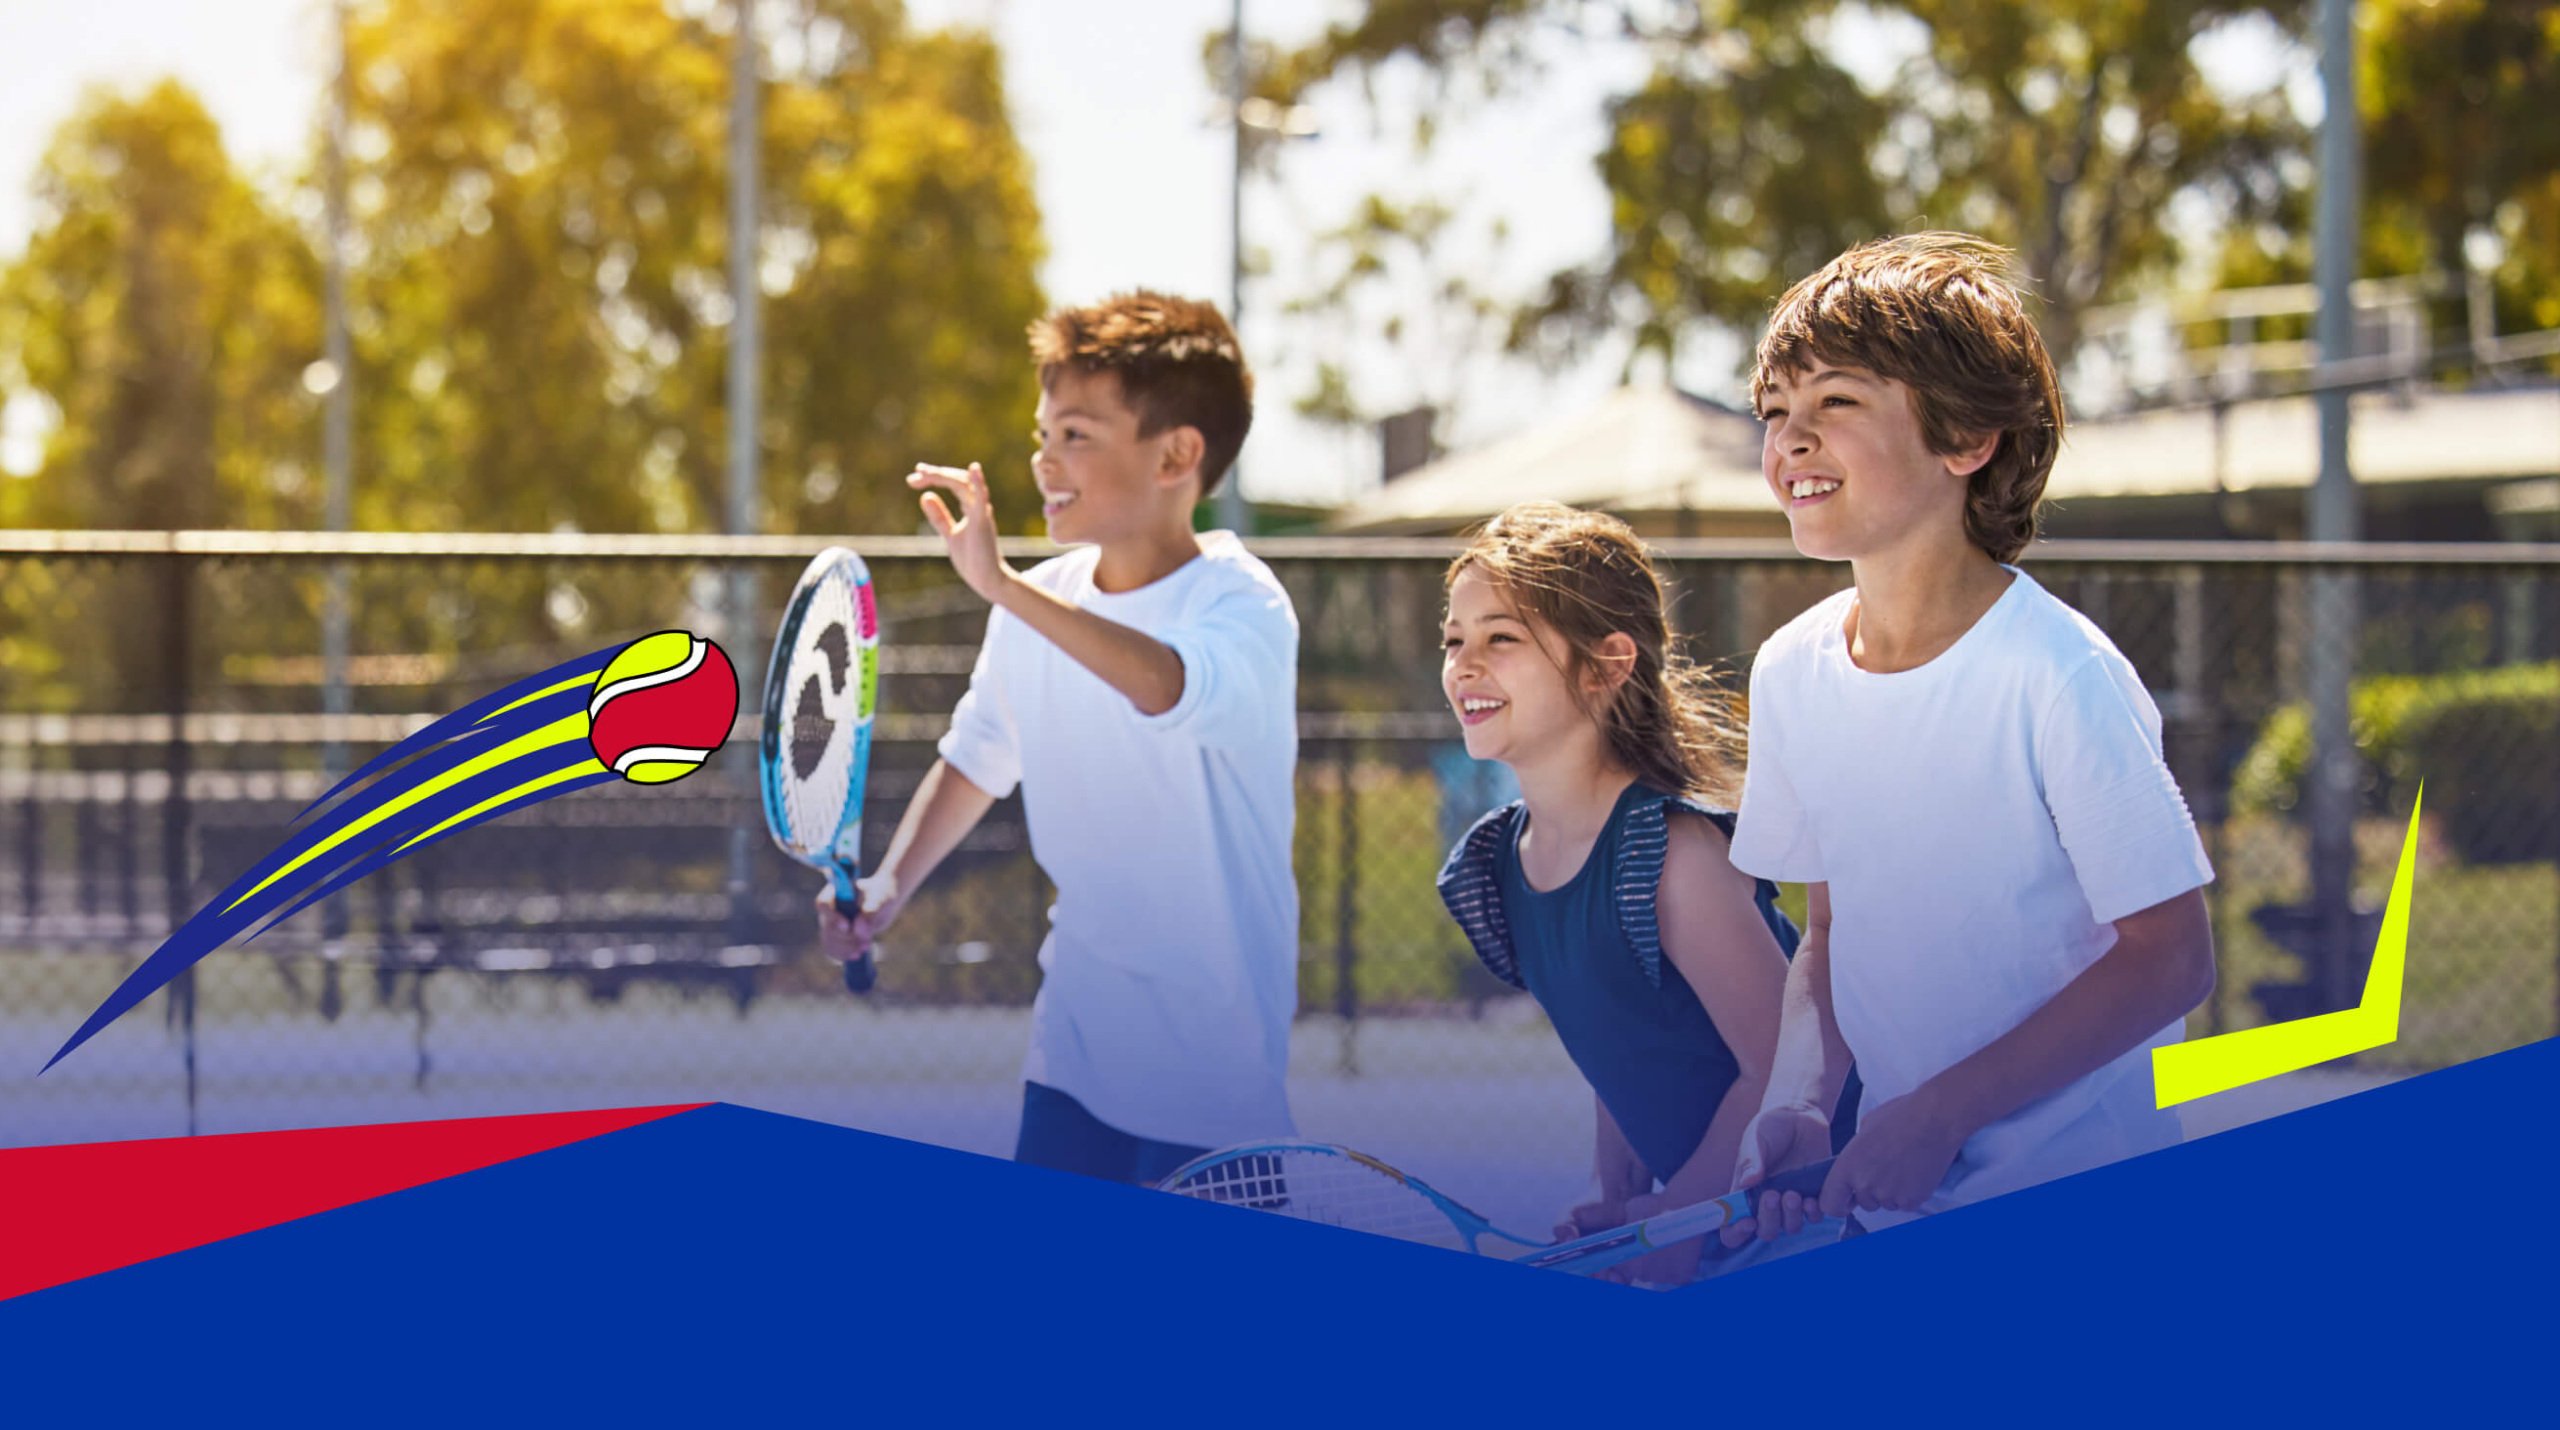 Photo of kids on tennis court